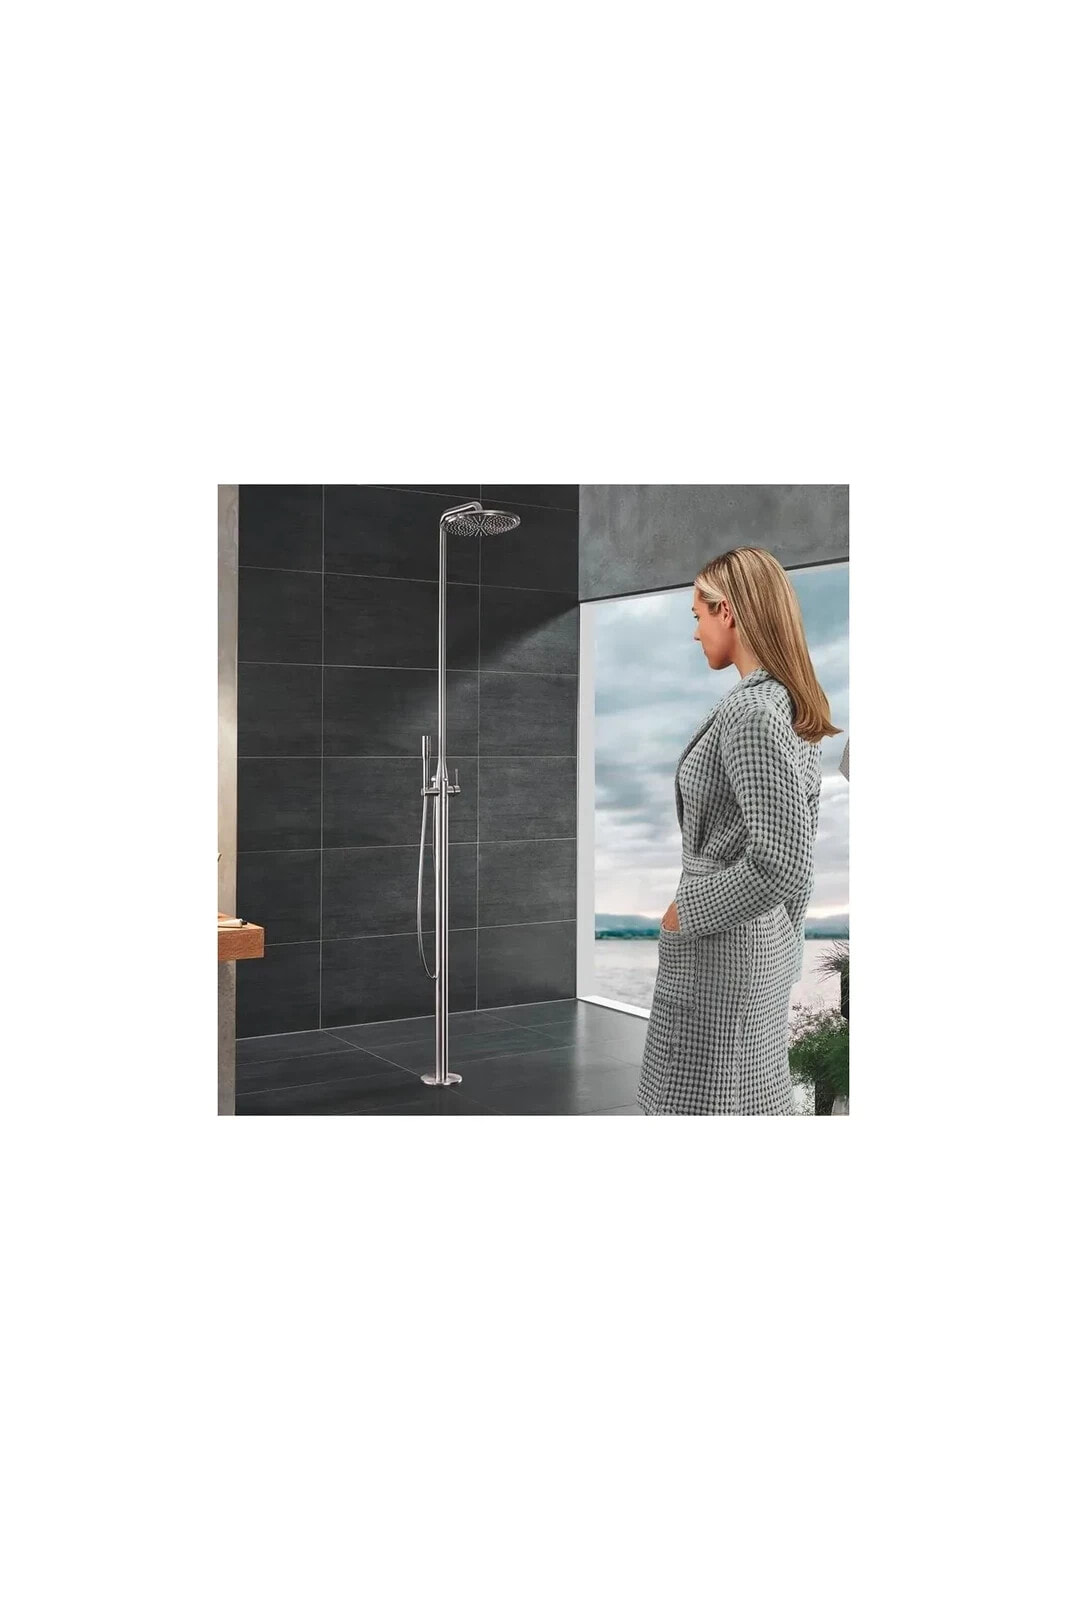 Essence Freestanding Duş Sistemi (ORTA DUŞ SİSTEMİ) 23741001